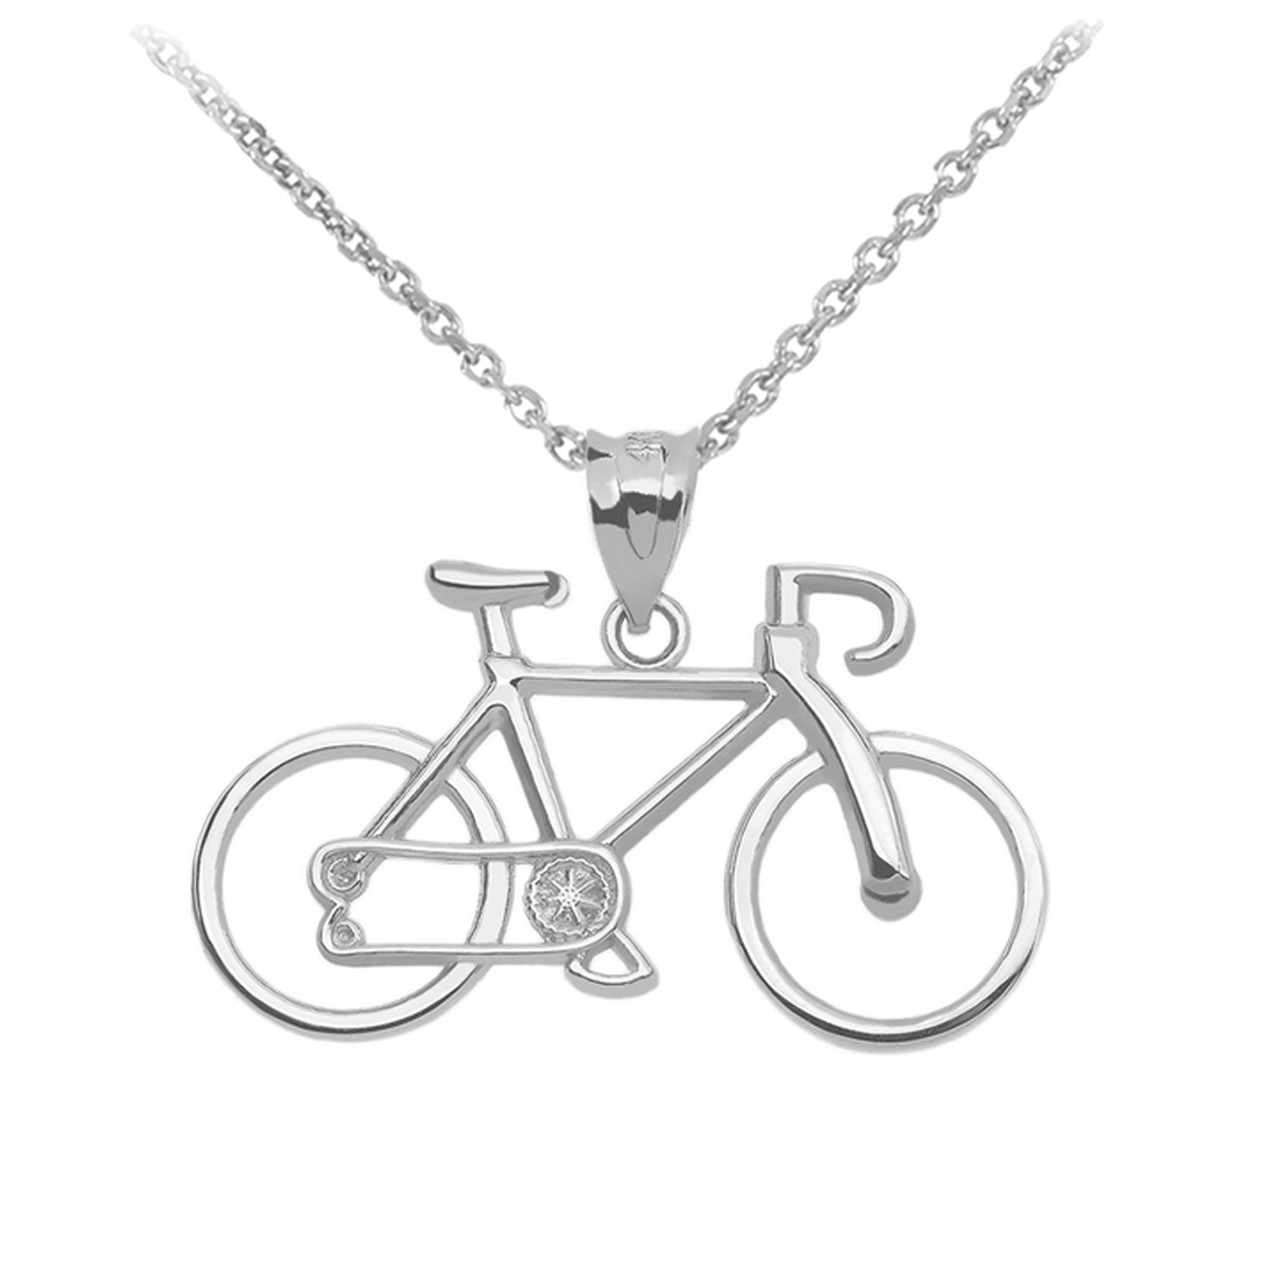 Bicycle pendant